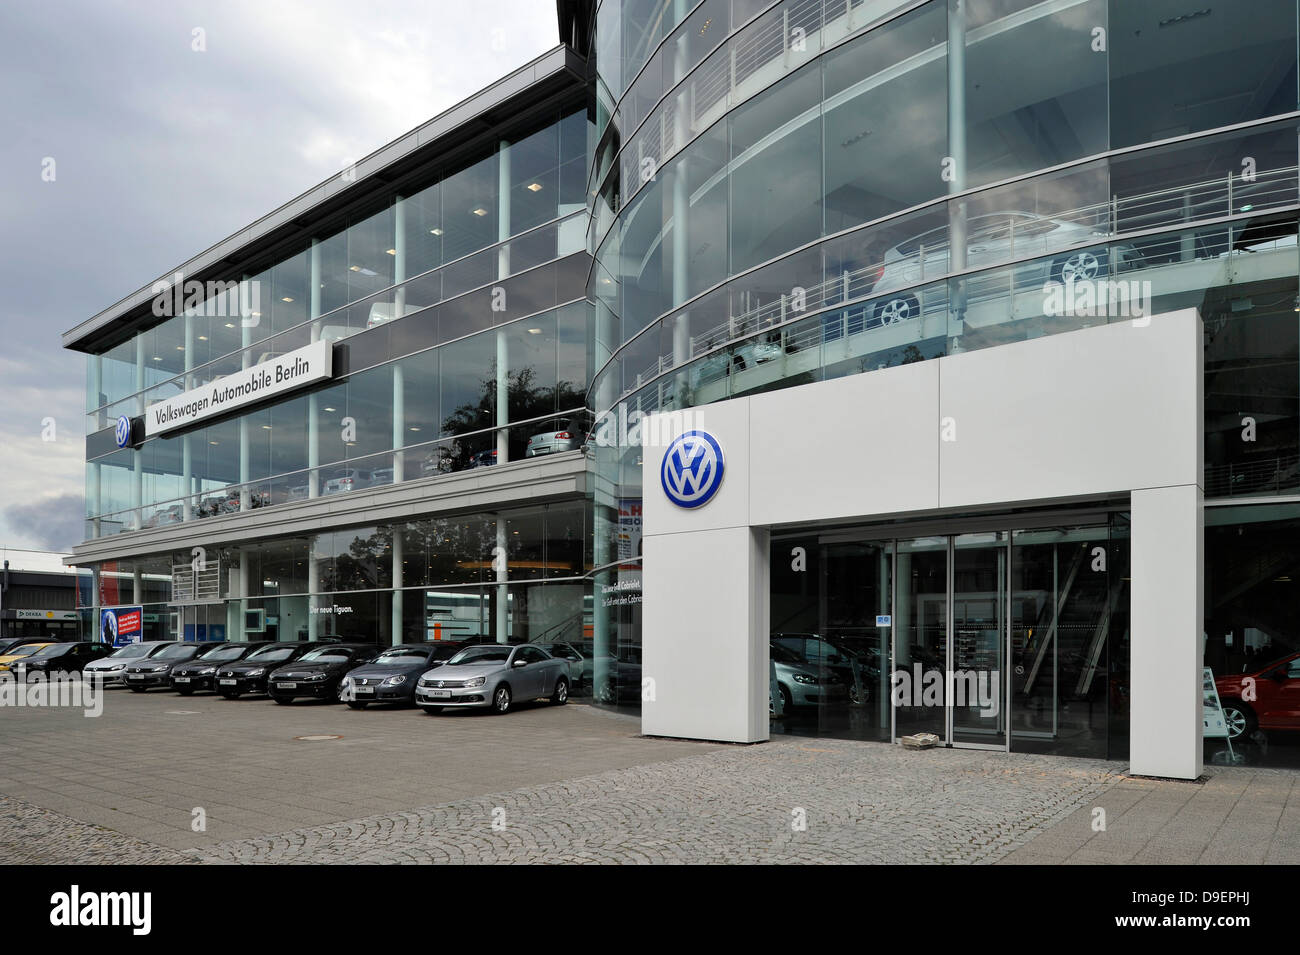 Volkswagen automobile Berlin headquarters, Franklinstrasse, Berlin, Germany,  Europe Stock Photo - Alamy